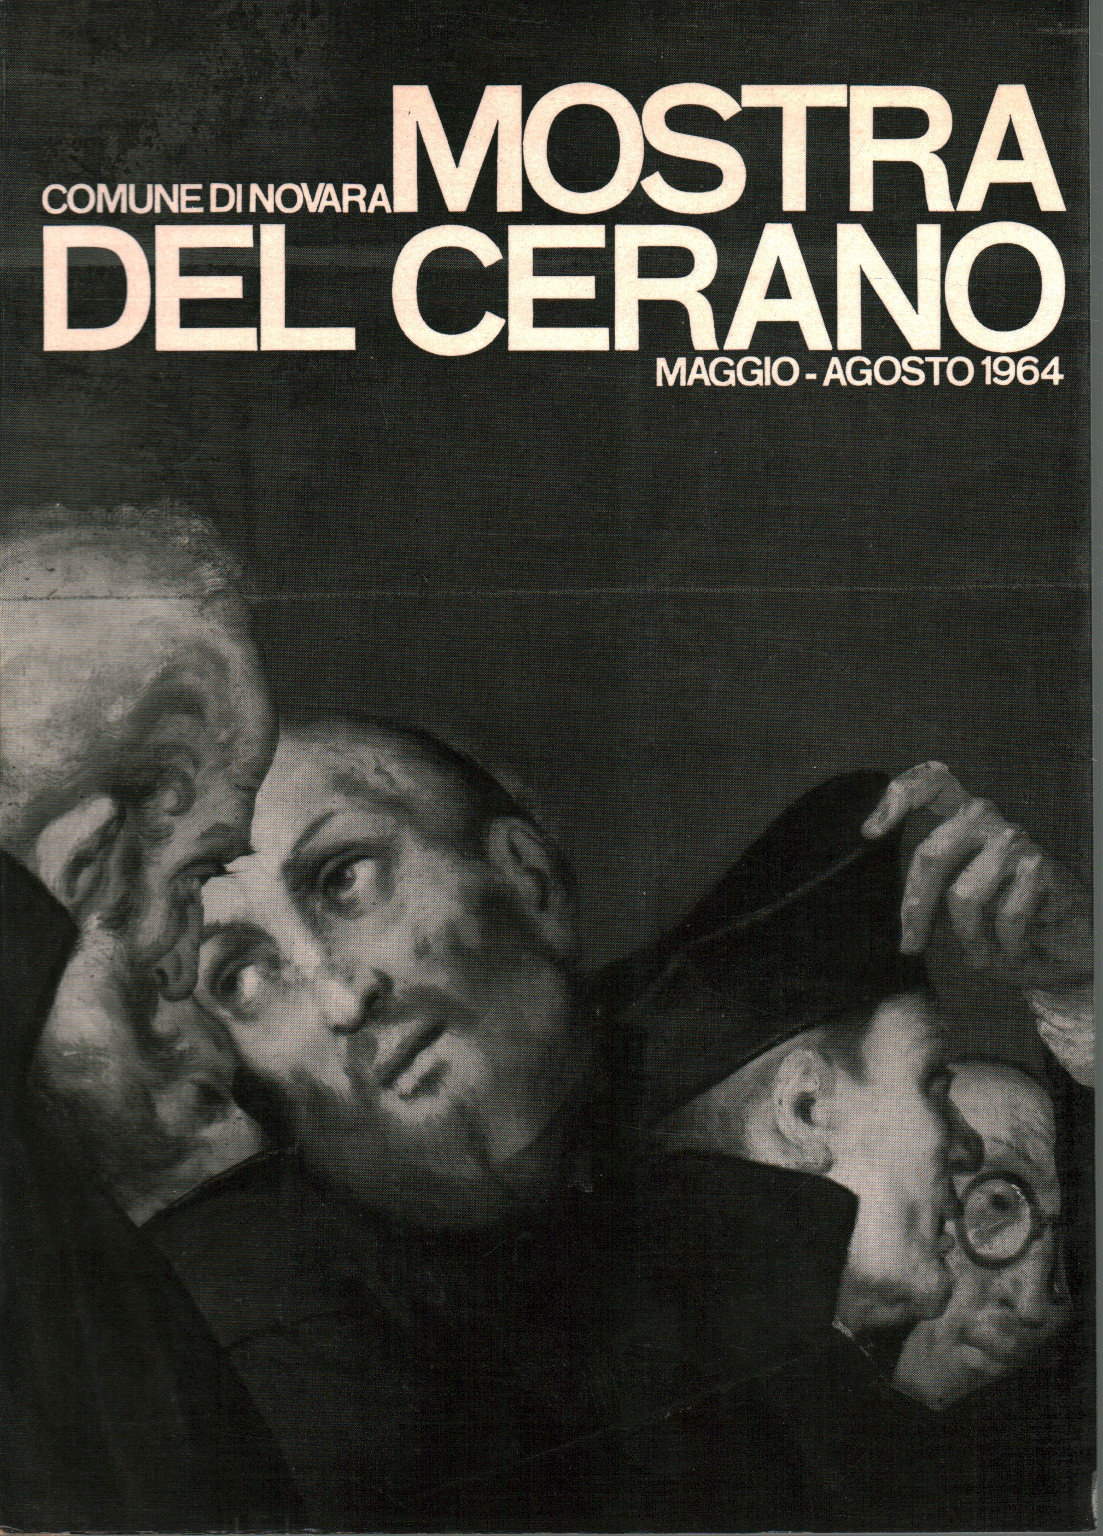 Cerano Exhibition